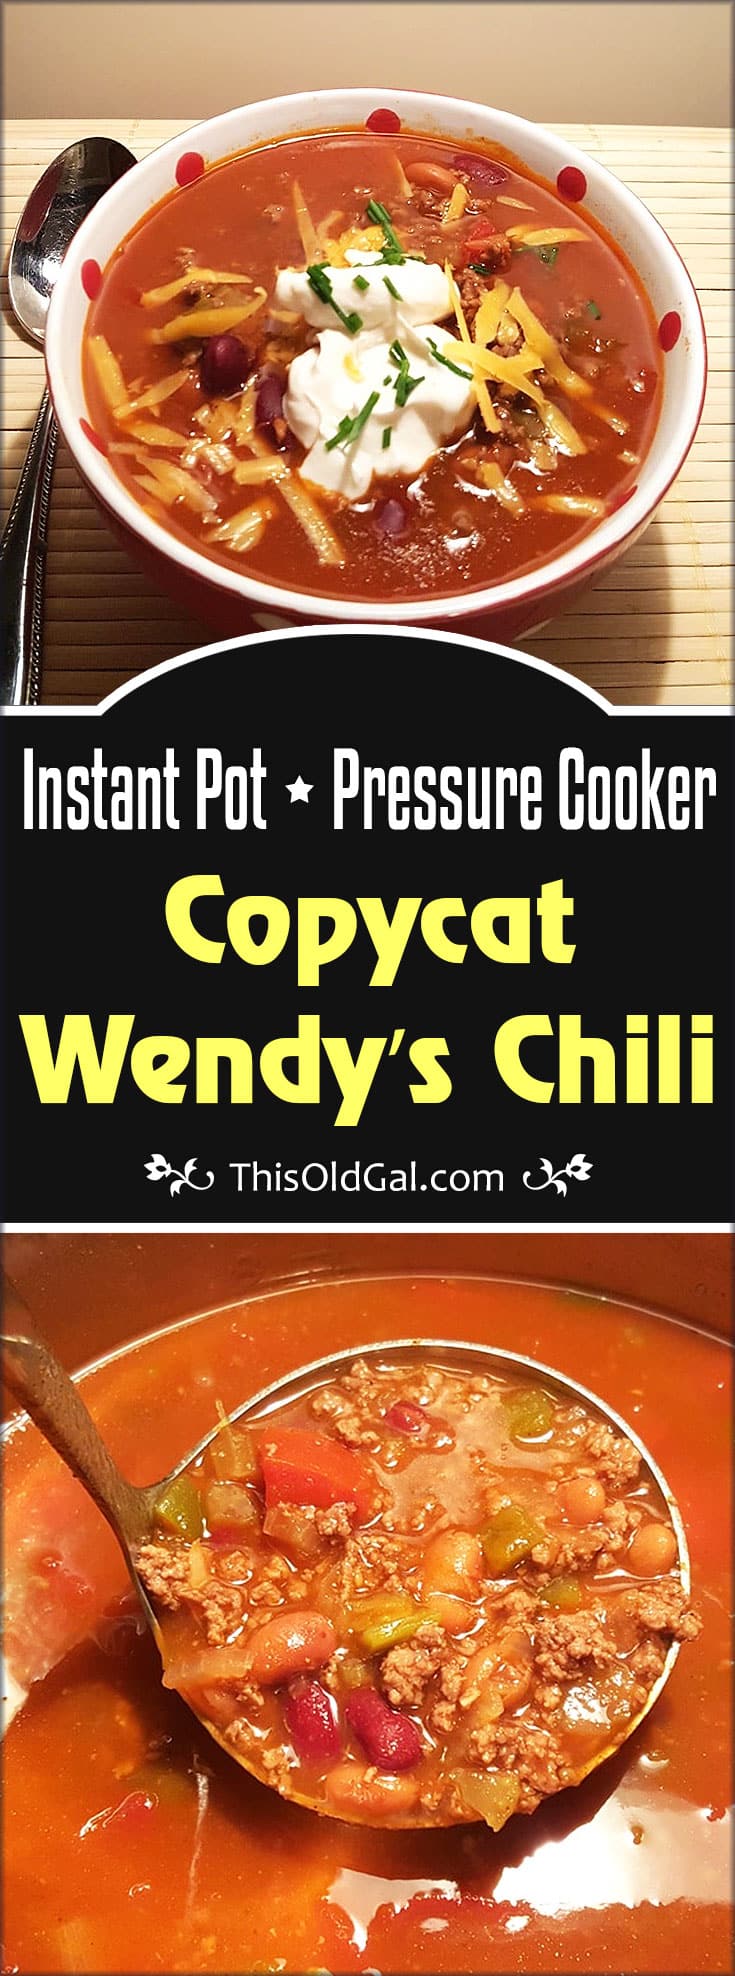 Pressure Cooker Copycat Wendy’s Chili